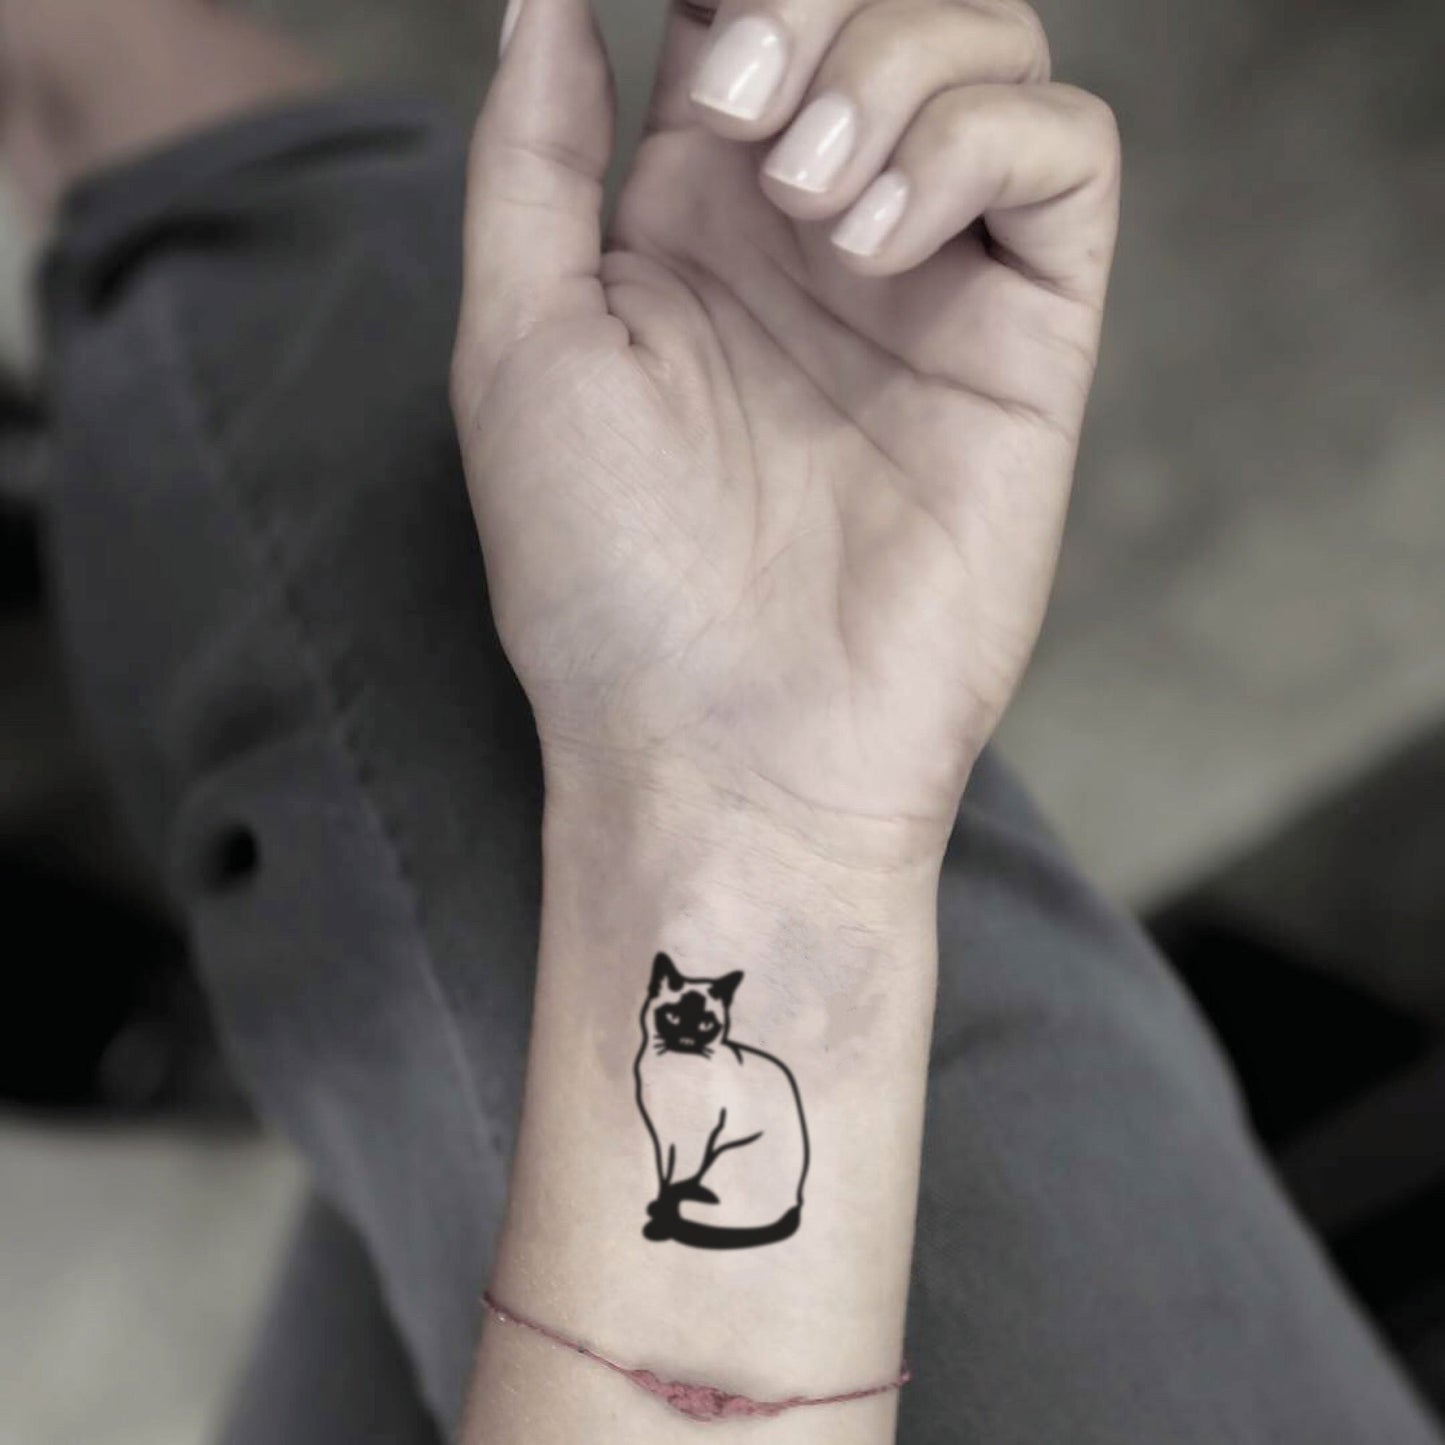 fake small siamese white cat tuxedo pet animal temporary tattoo sticker design idea on wrist